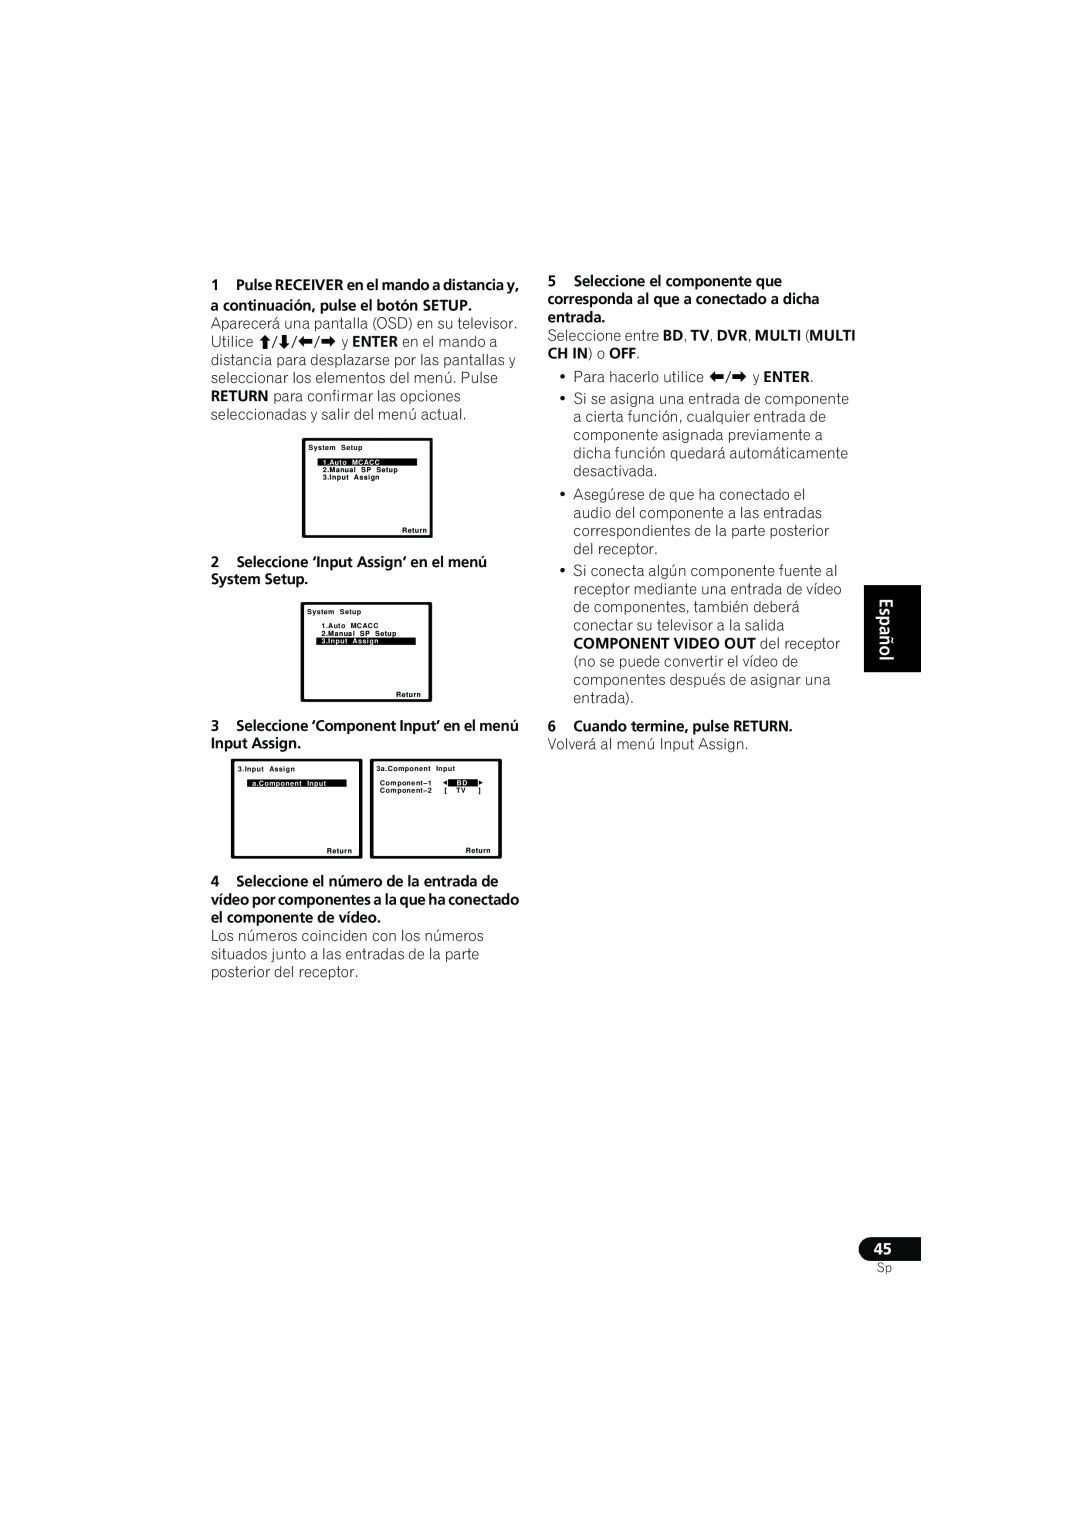 Pioneer VSX-819H-S manual English Español, 2Seleccione ‘Input Assign’ en el menú System Setup 